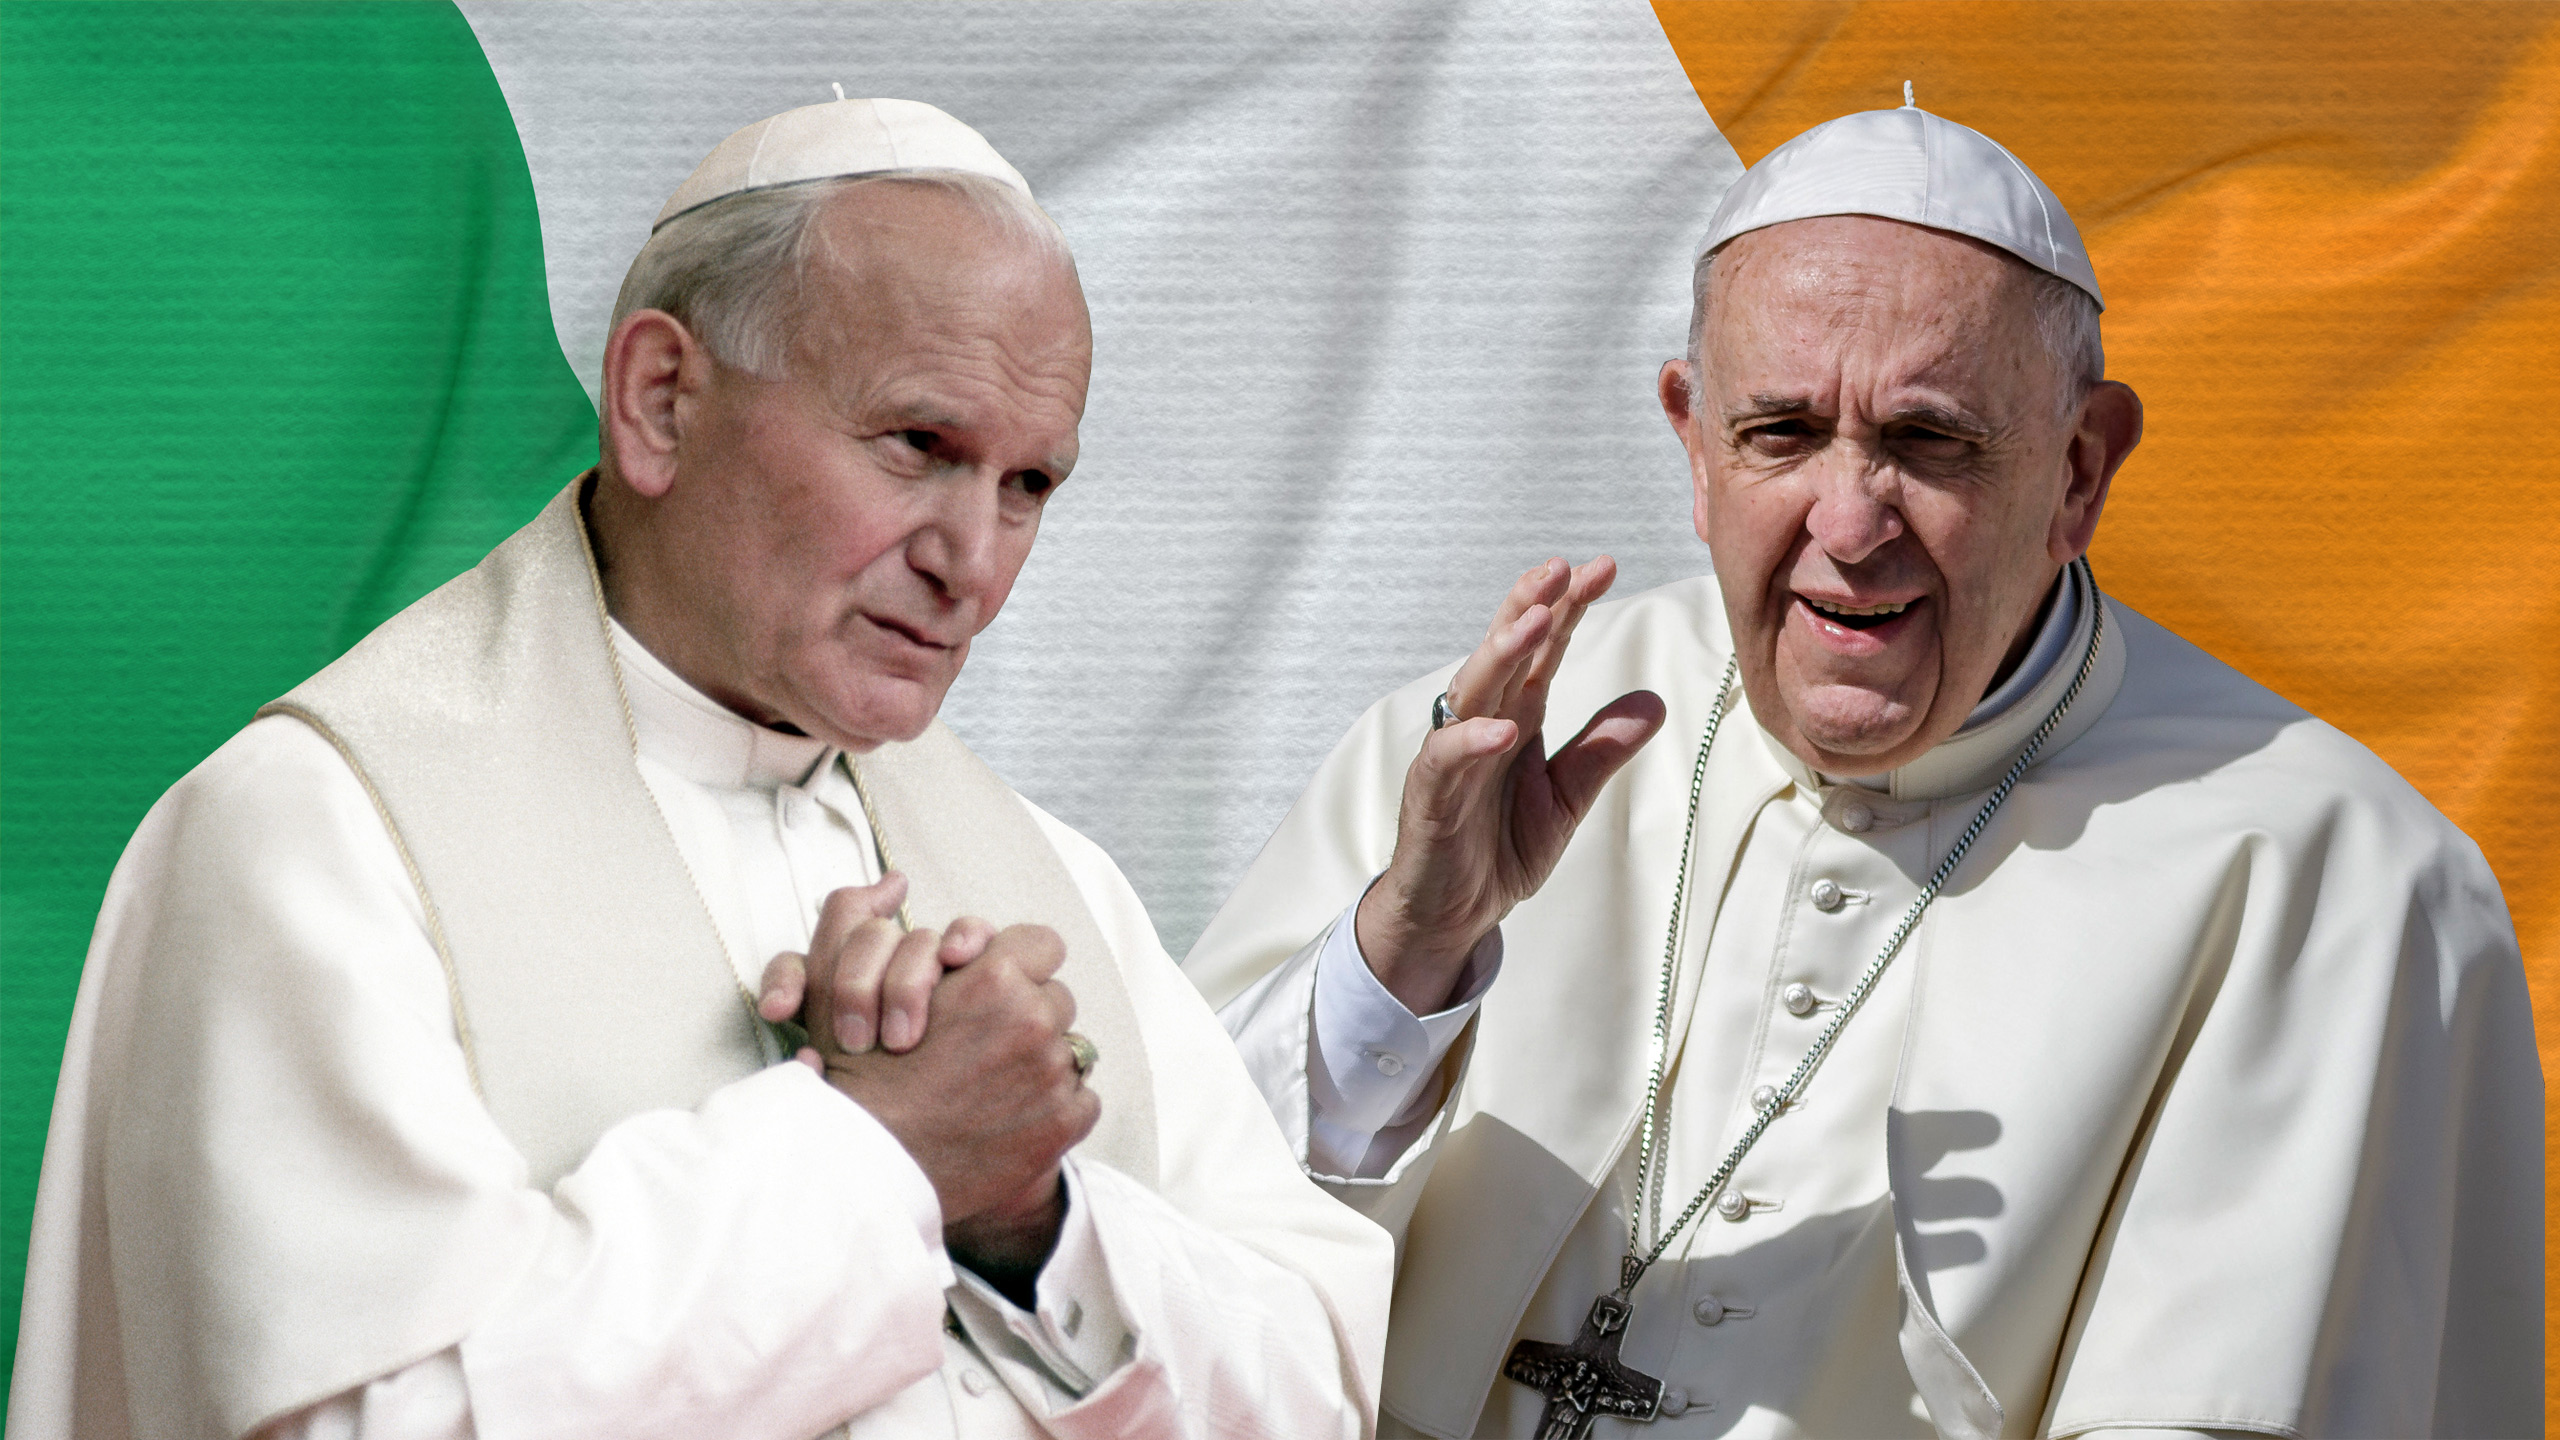 Ireland Between Popes Bbc News